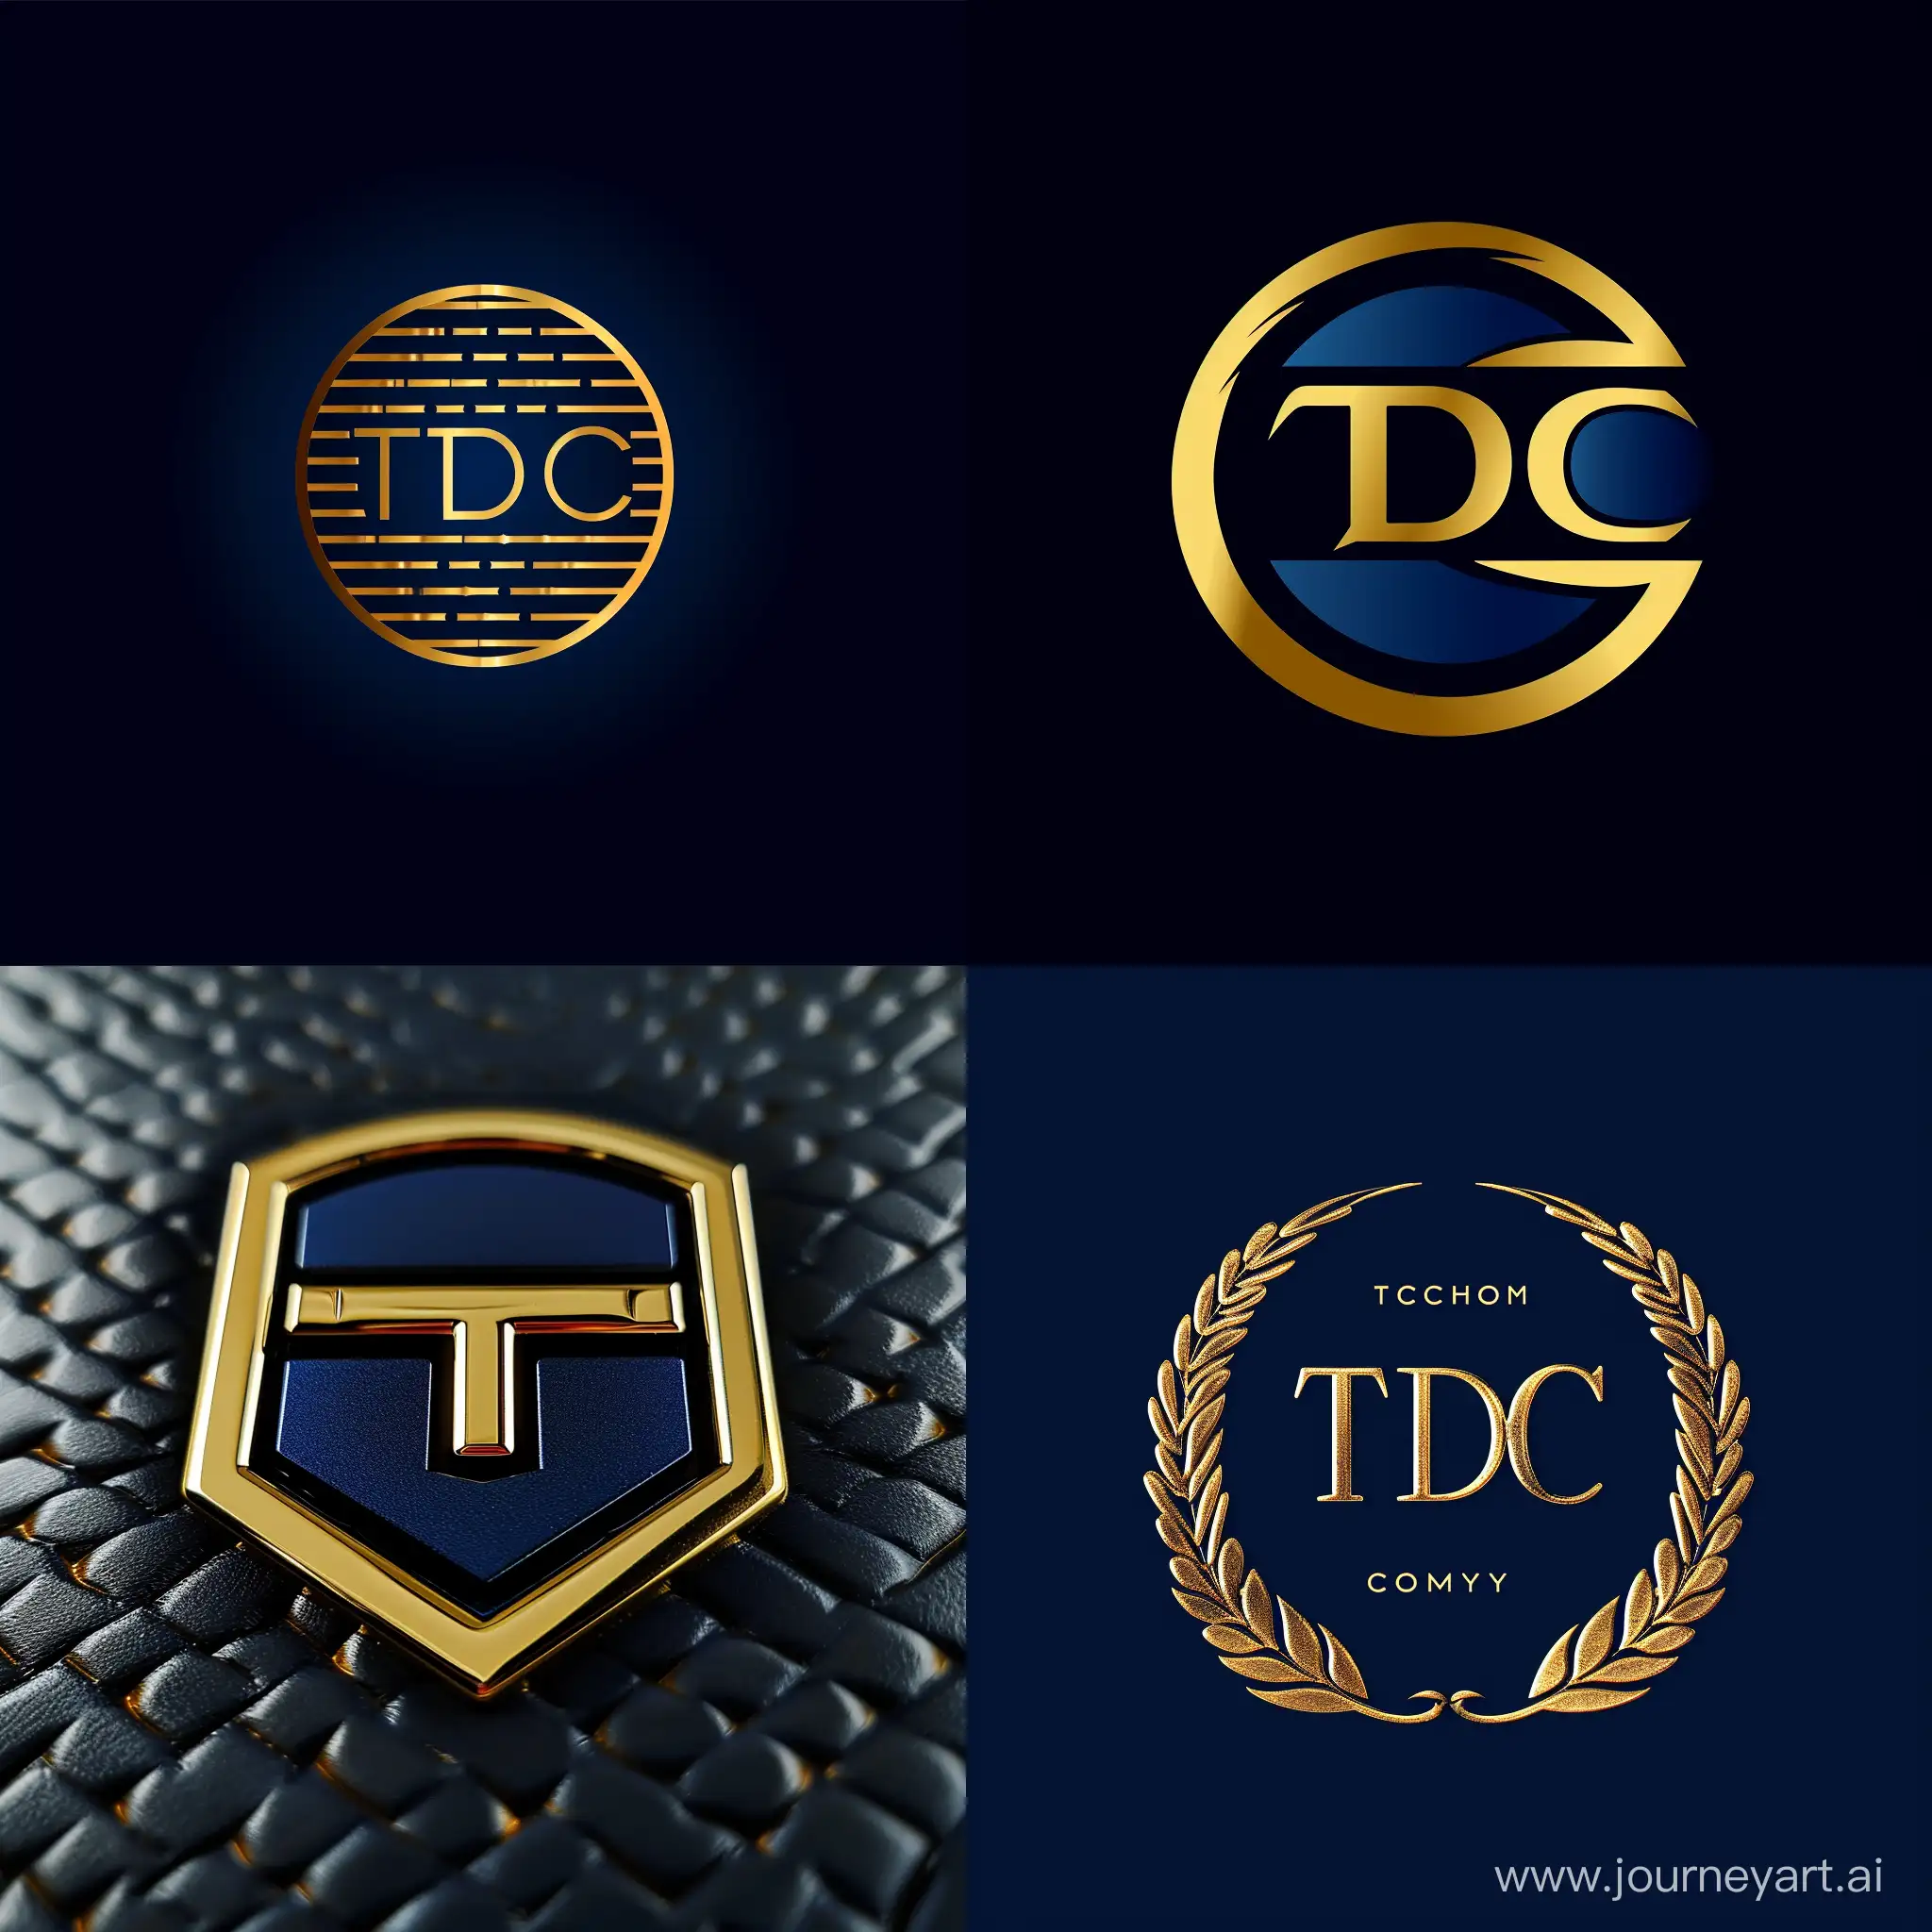 logo gold blue TDC grill COMPANY

